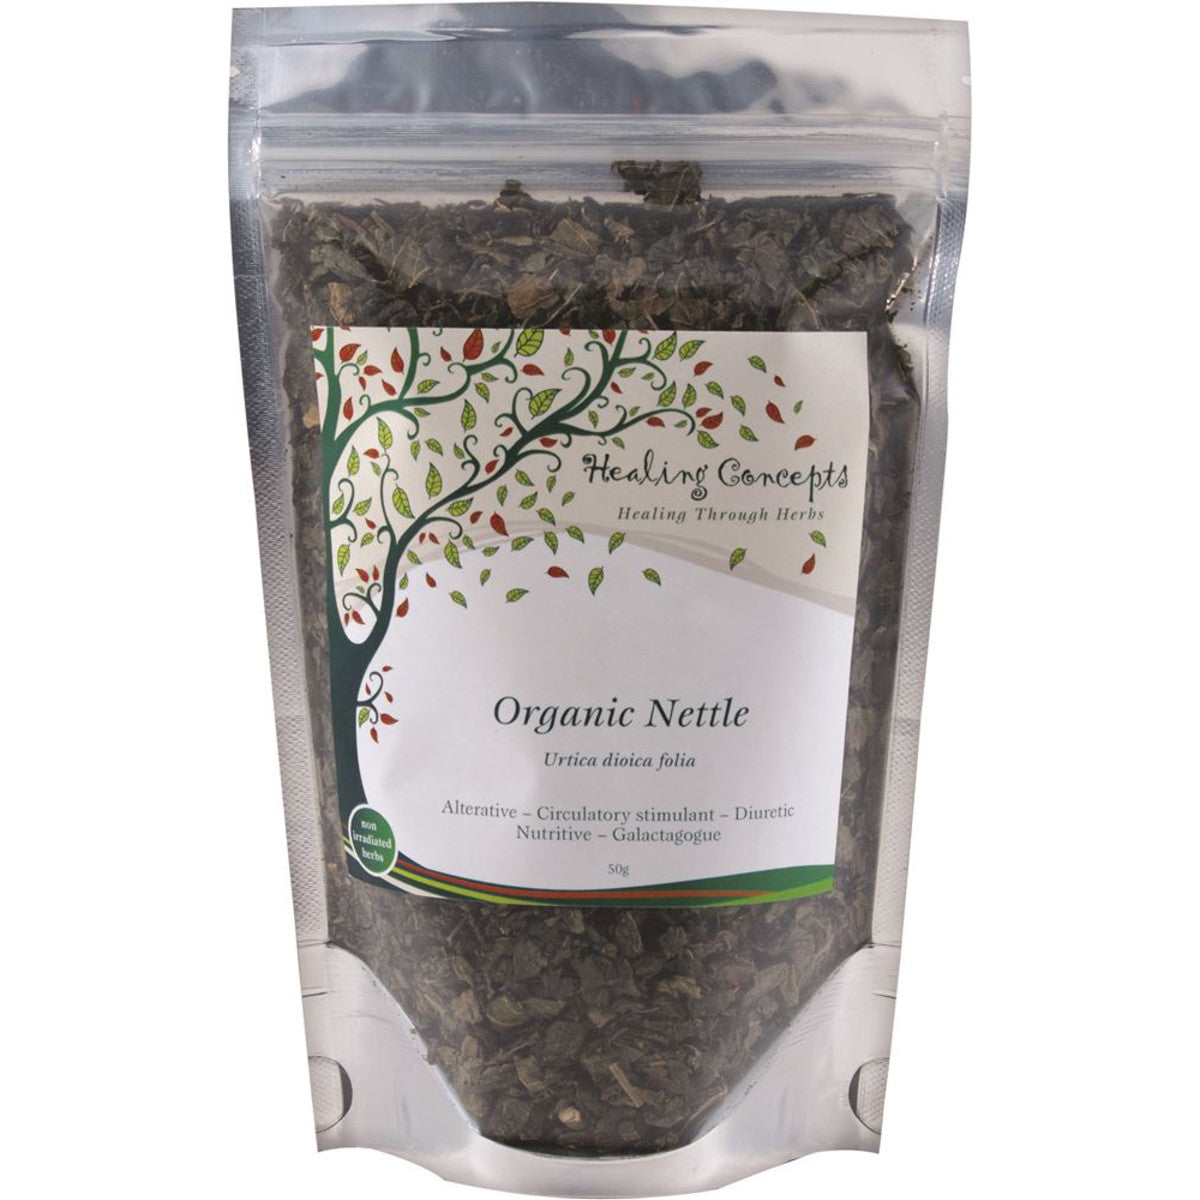 Healing Concepts Nettle Tea 50g, Certified Organic